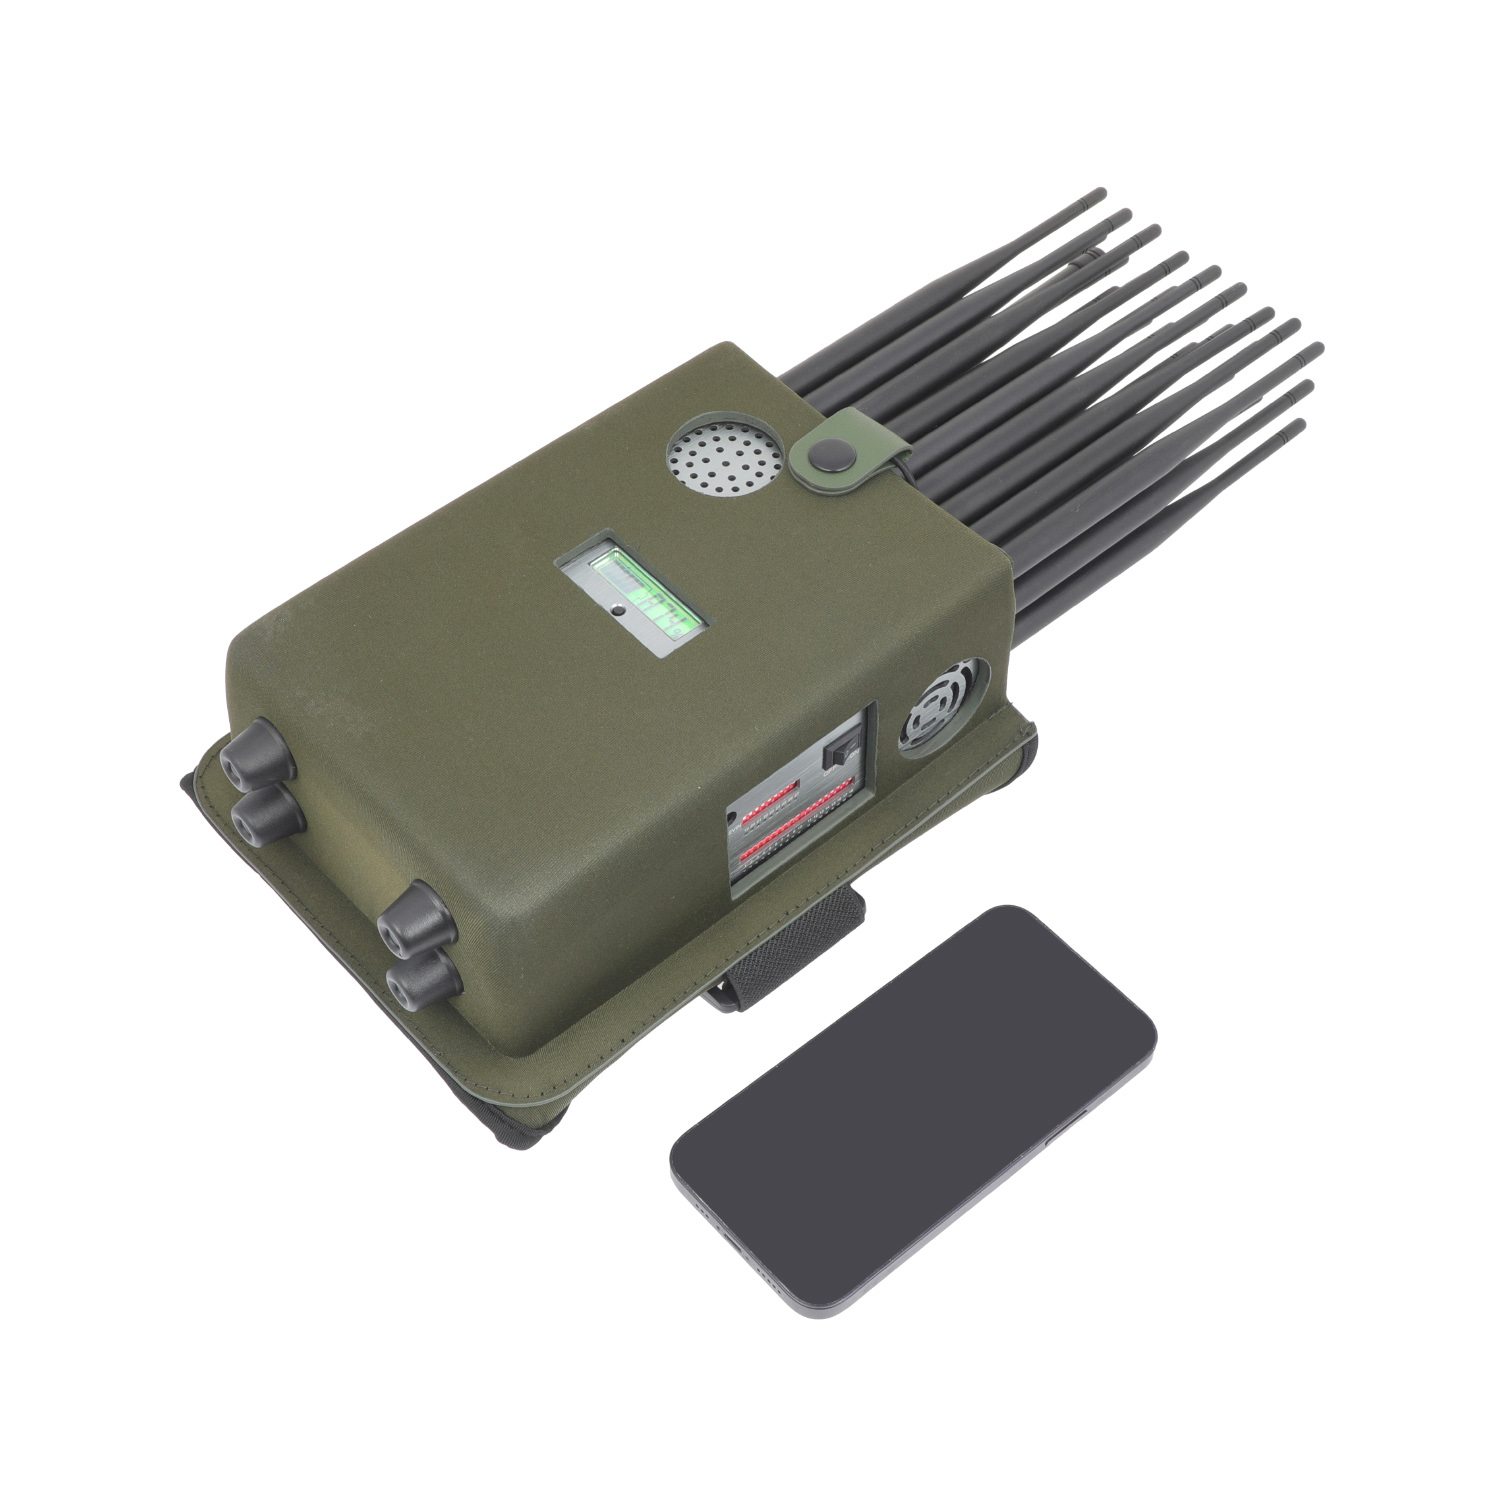 27 Antennas Handheld Jammer Portable Blocker All Mobile Phones Used Worldwide 2G 3G 4G 5G GPS WiFi RF Signals Inhibitor